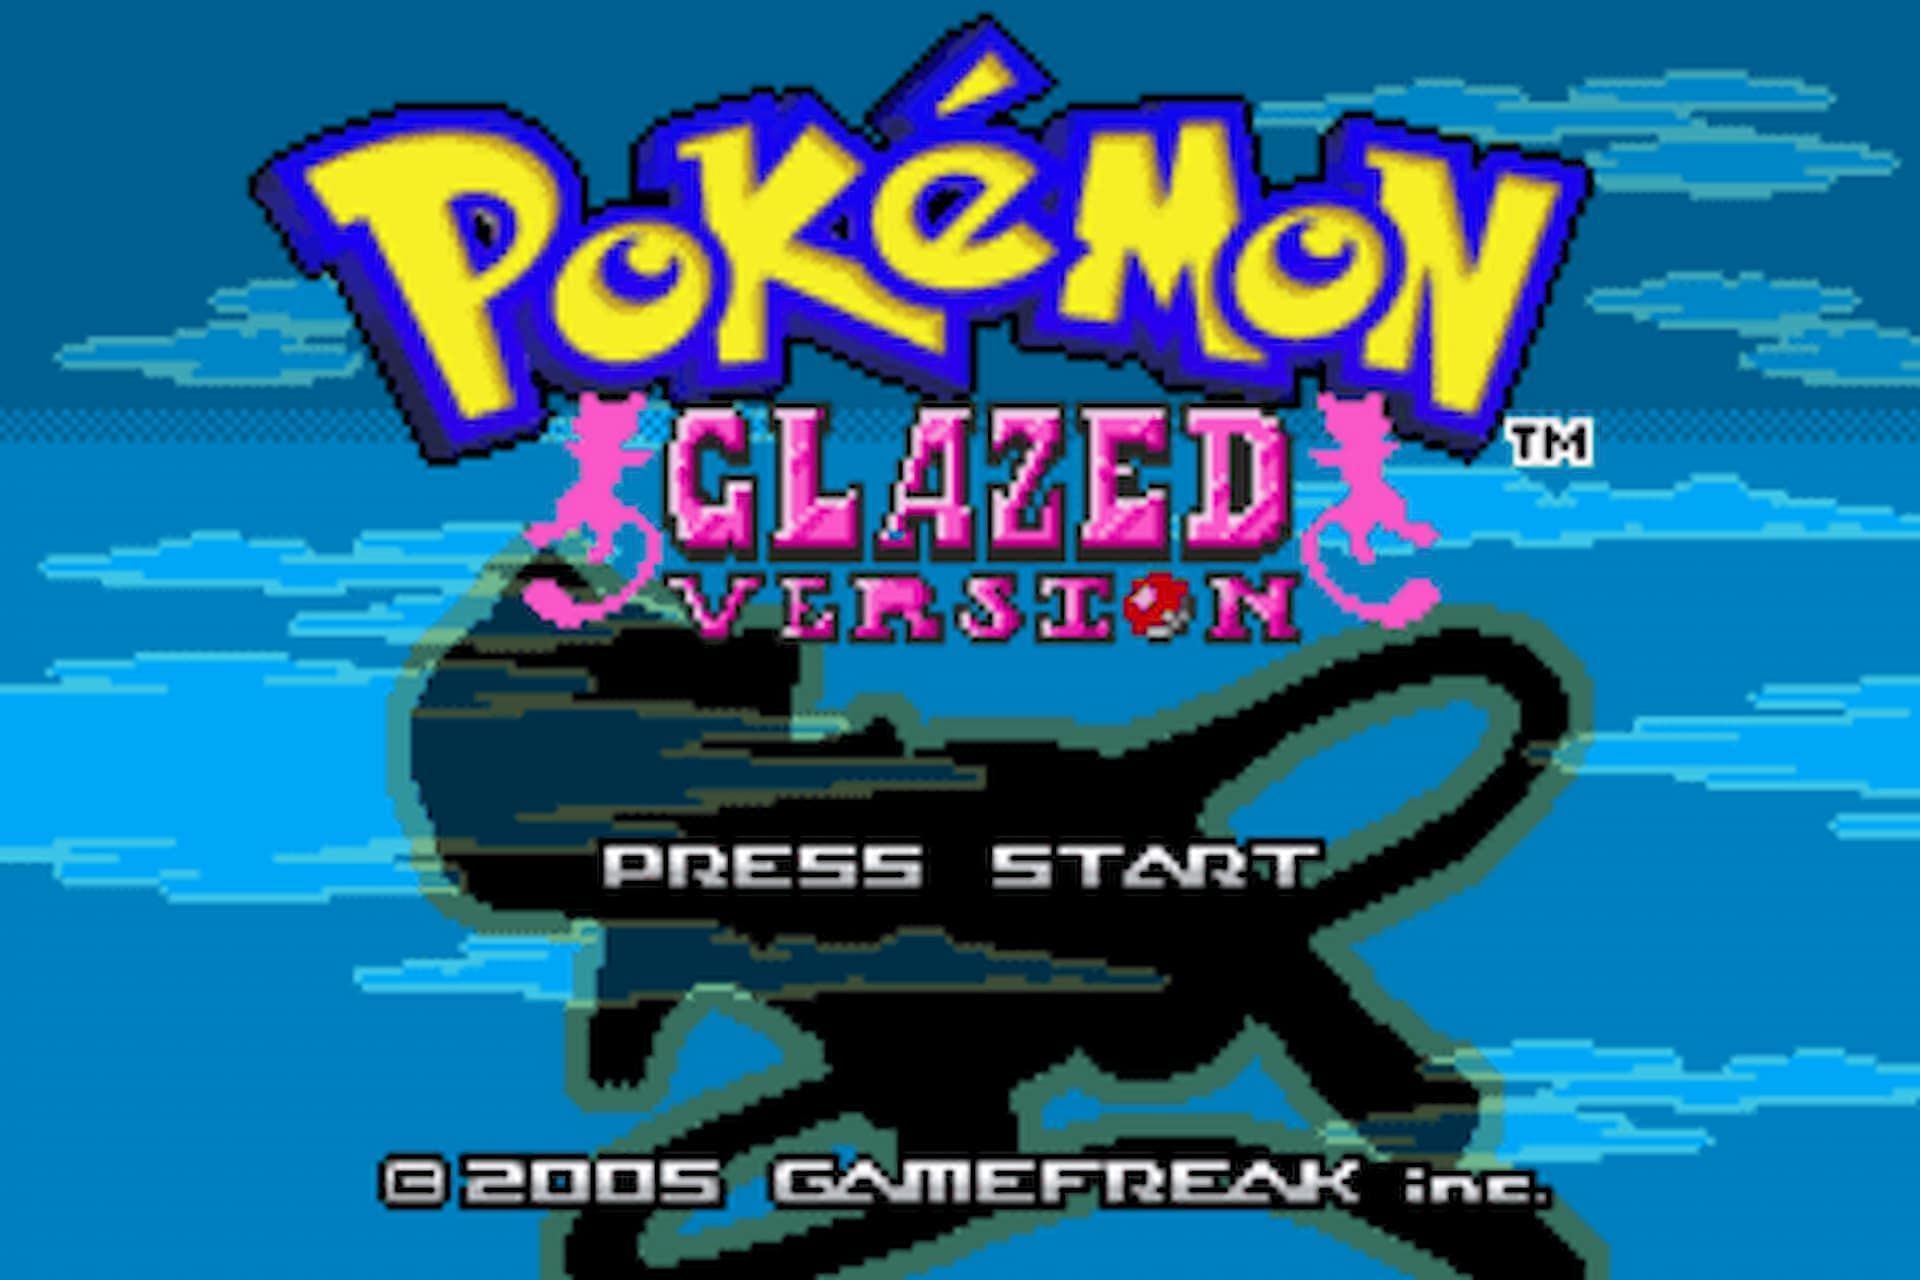 Title screen of Glazed (Image via redriders180)